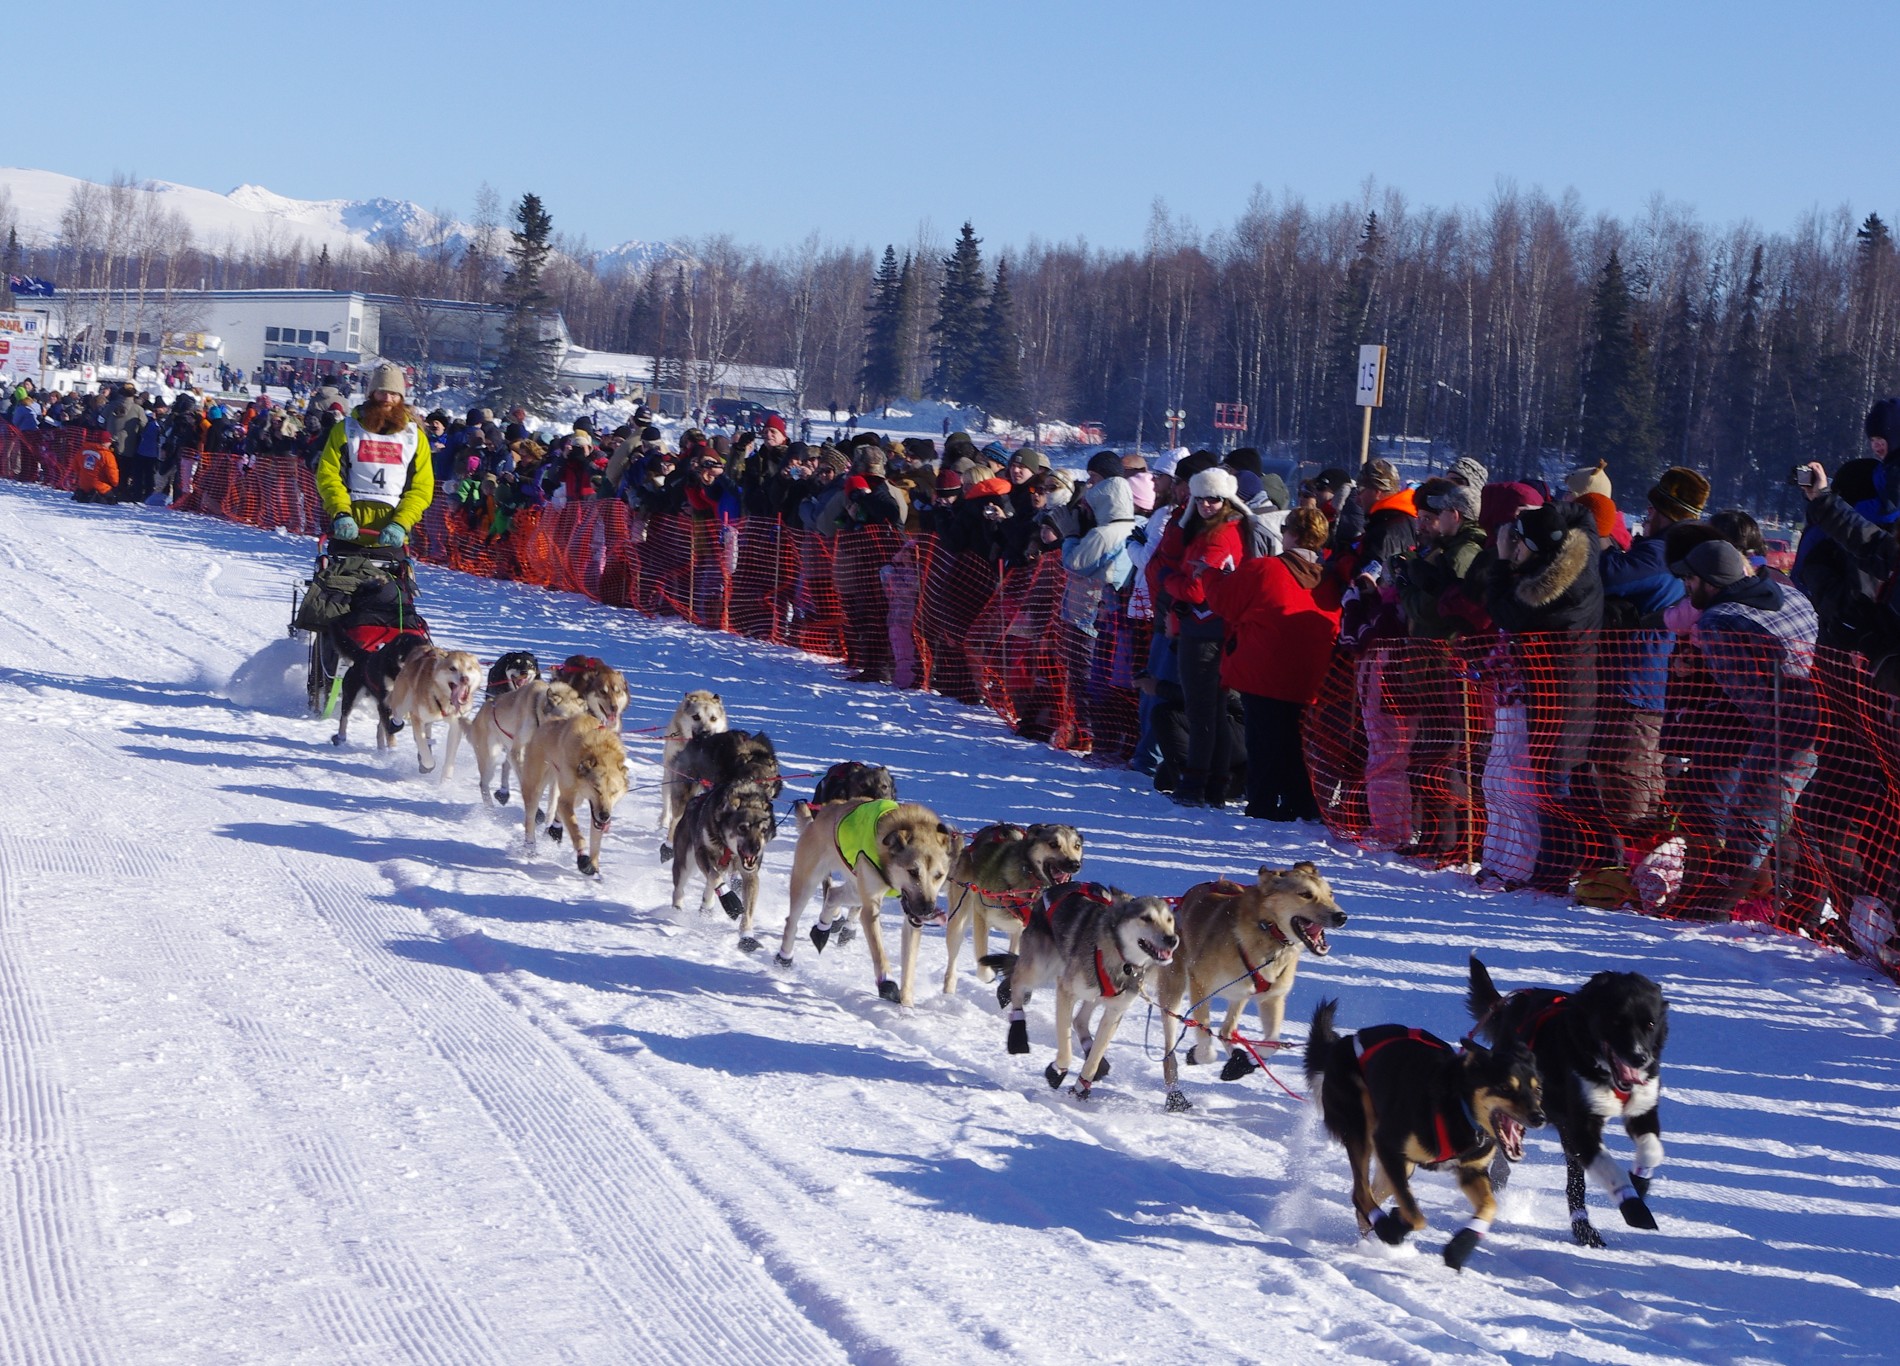 2011 Iditarod Race - Team 4 sled dogs and musher.